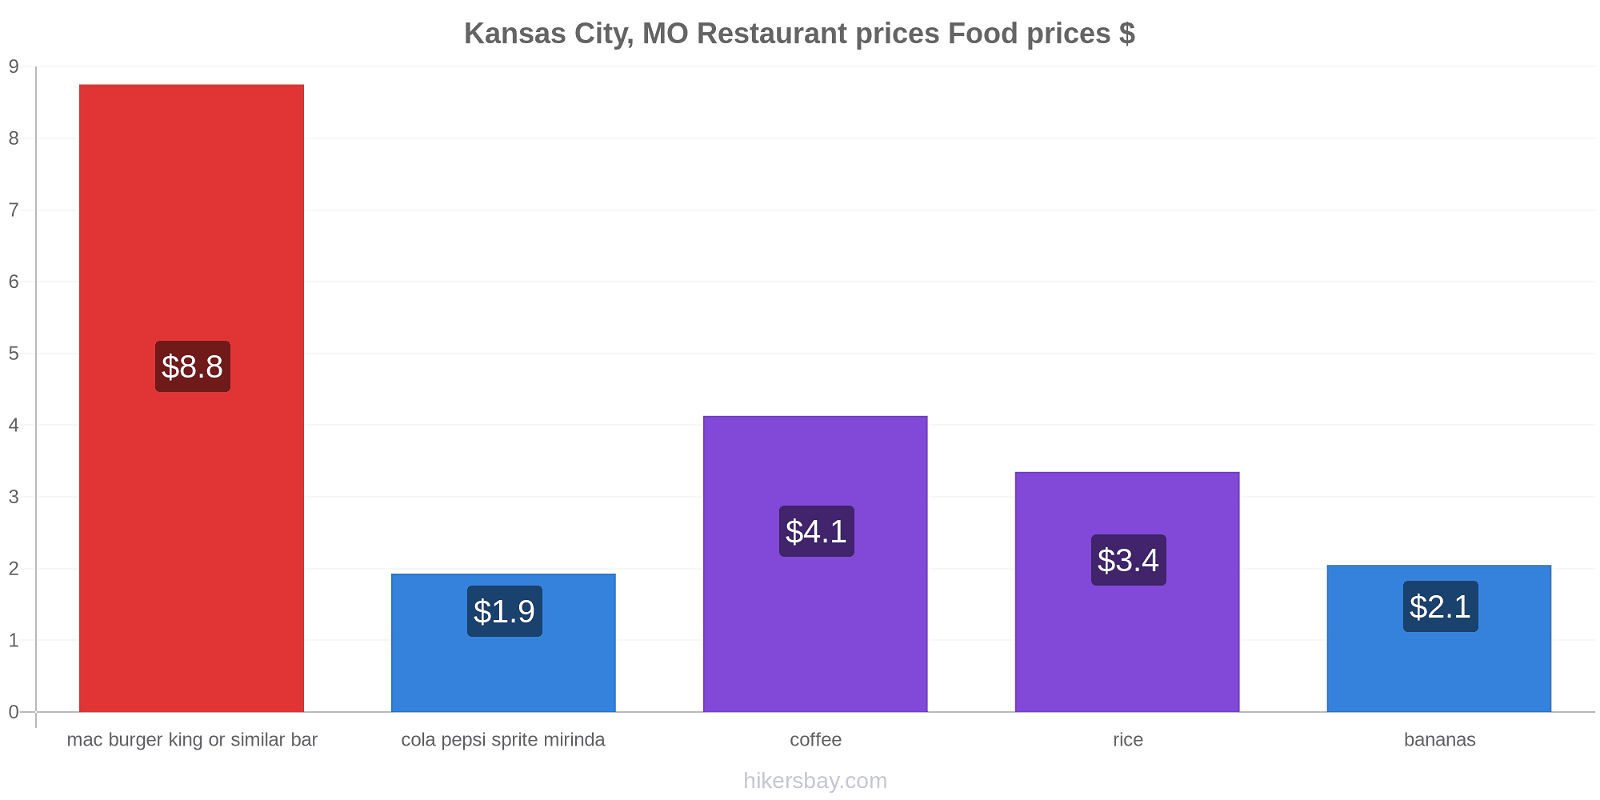 Kansas City, MO price changes hikersbay.com